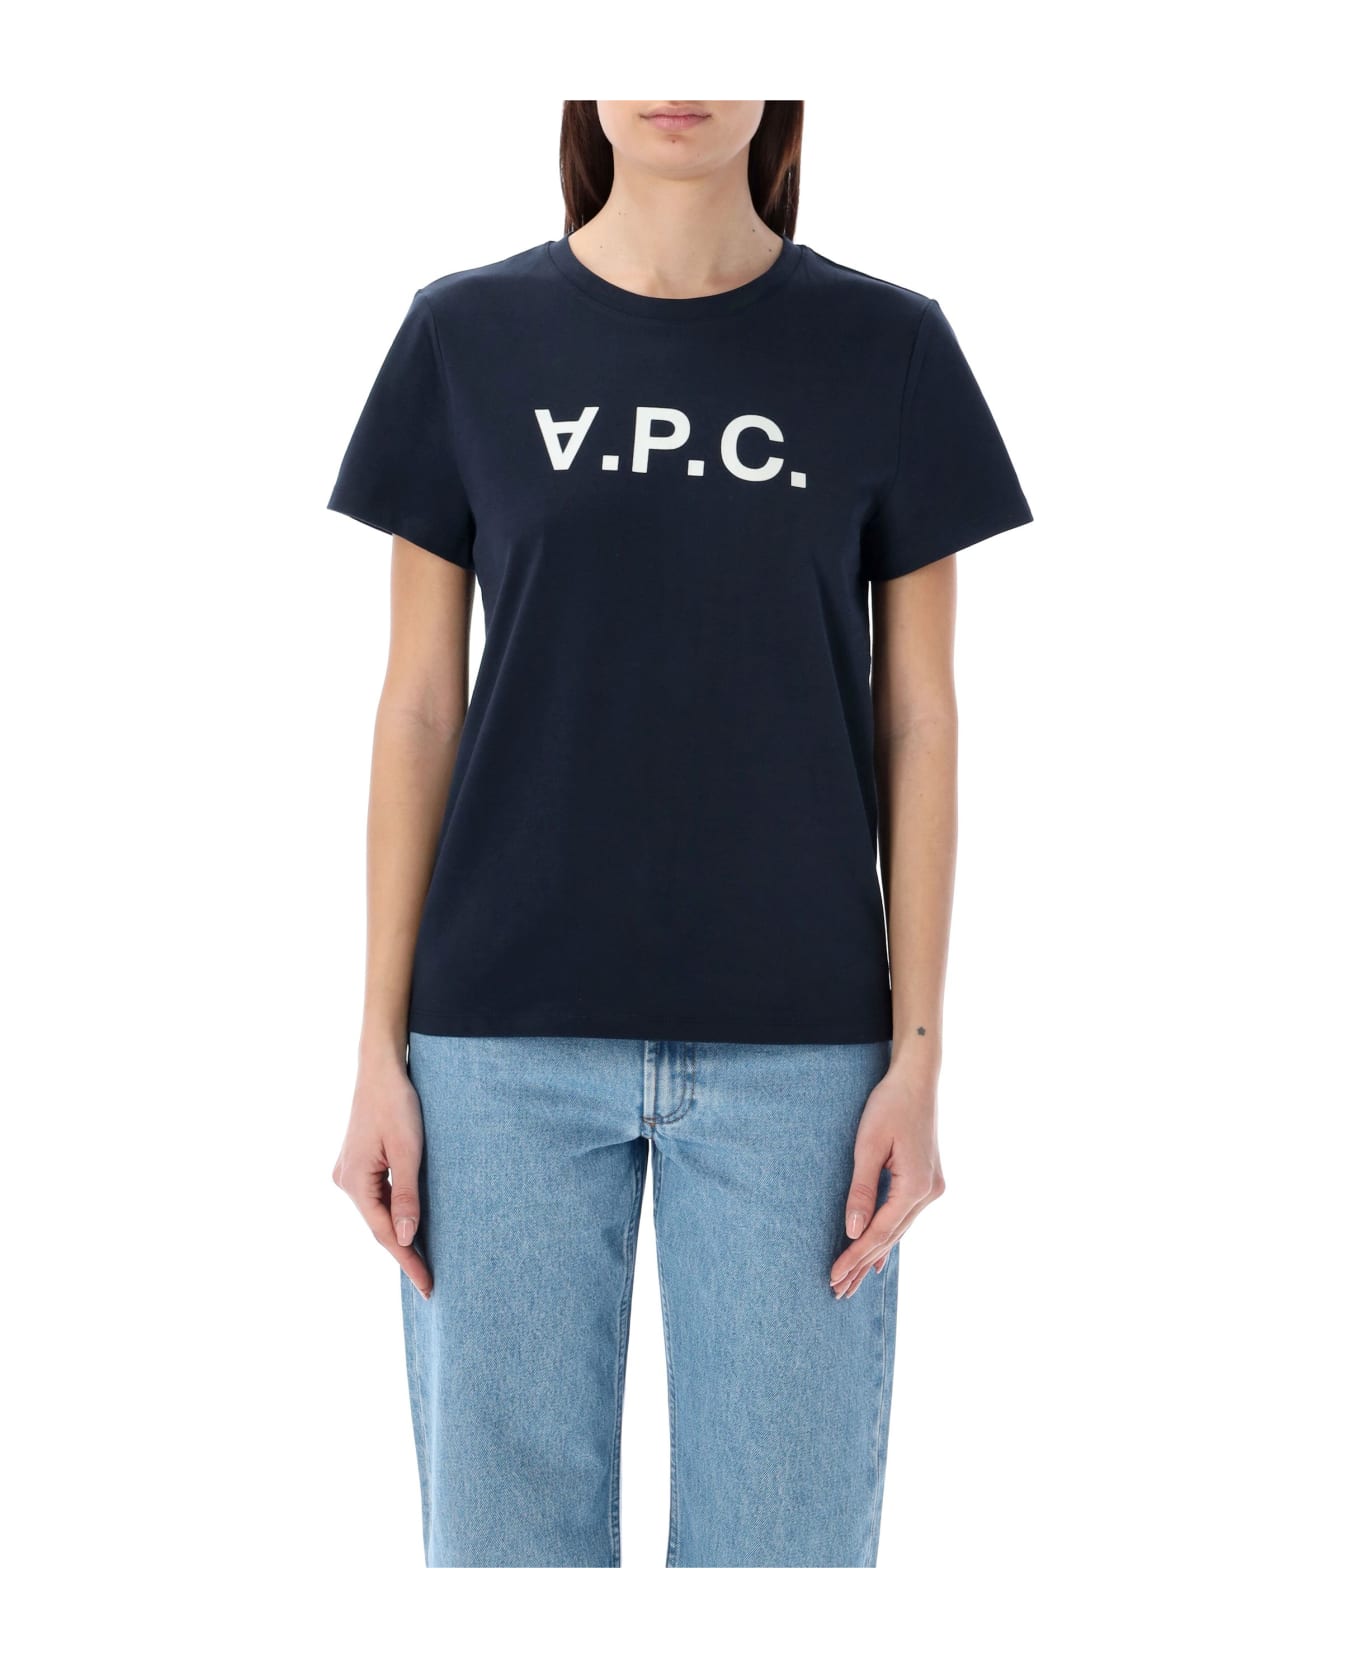 A.P.C. Vpc T-shirt - DARK NAVY